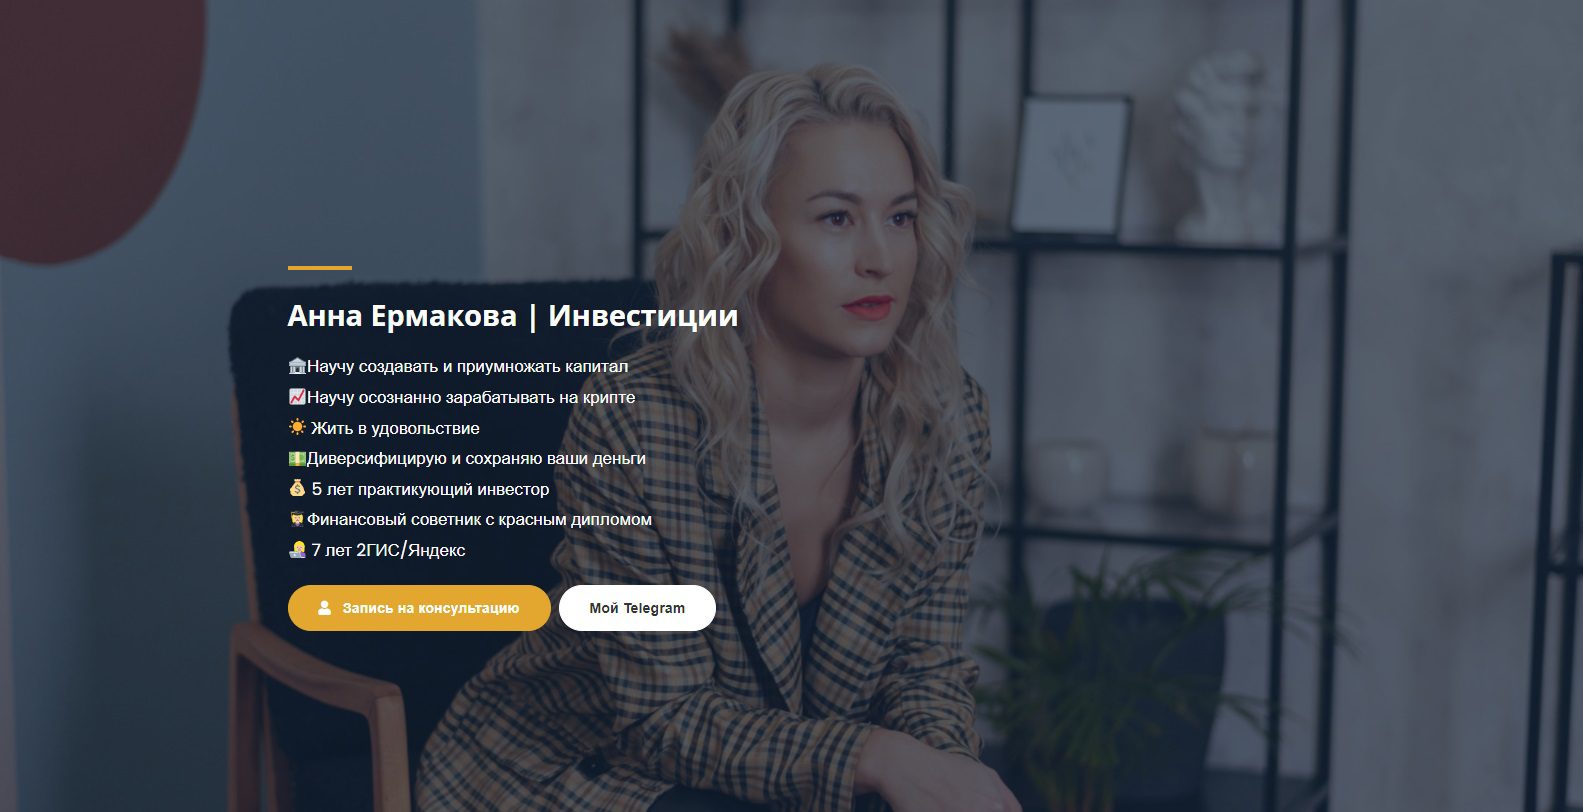 Сайт проекта Анна Ермакова инвестиции